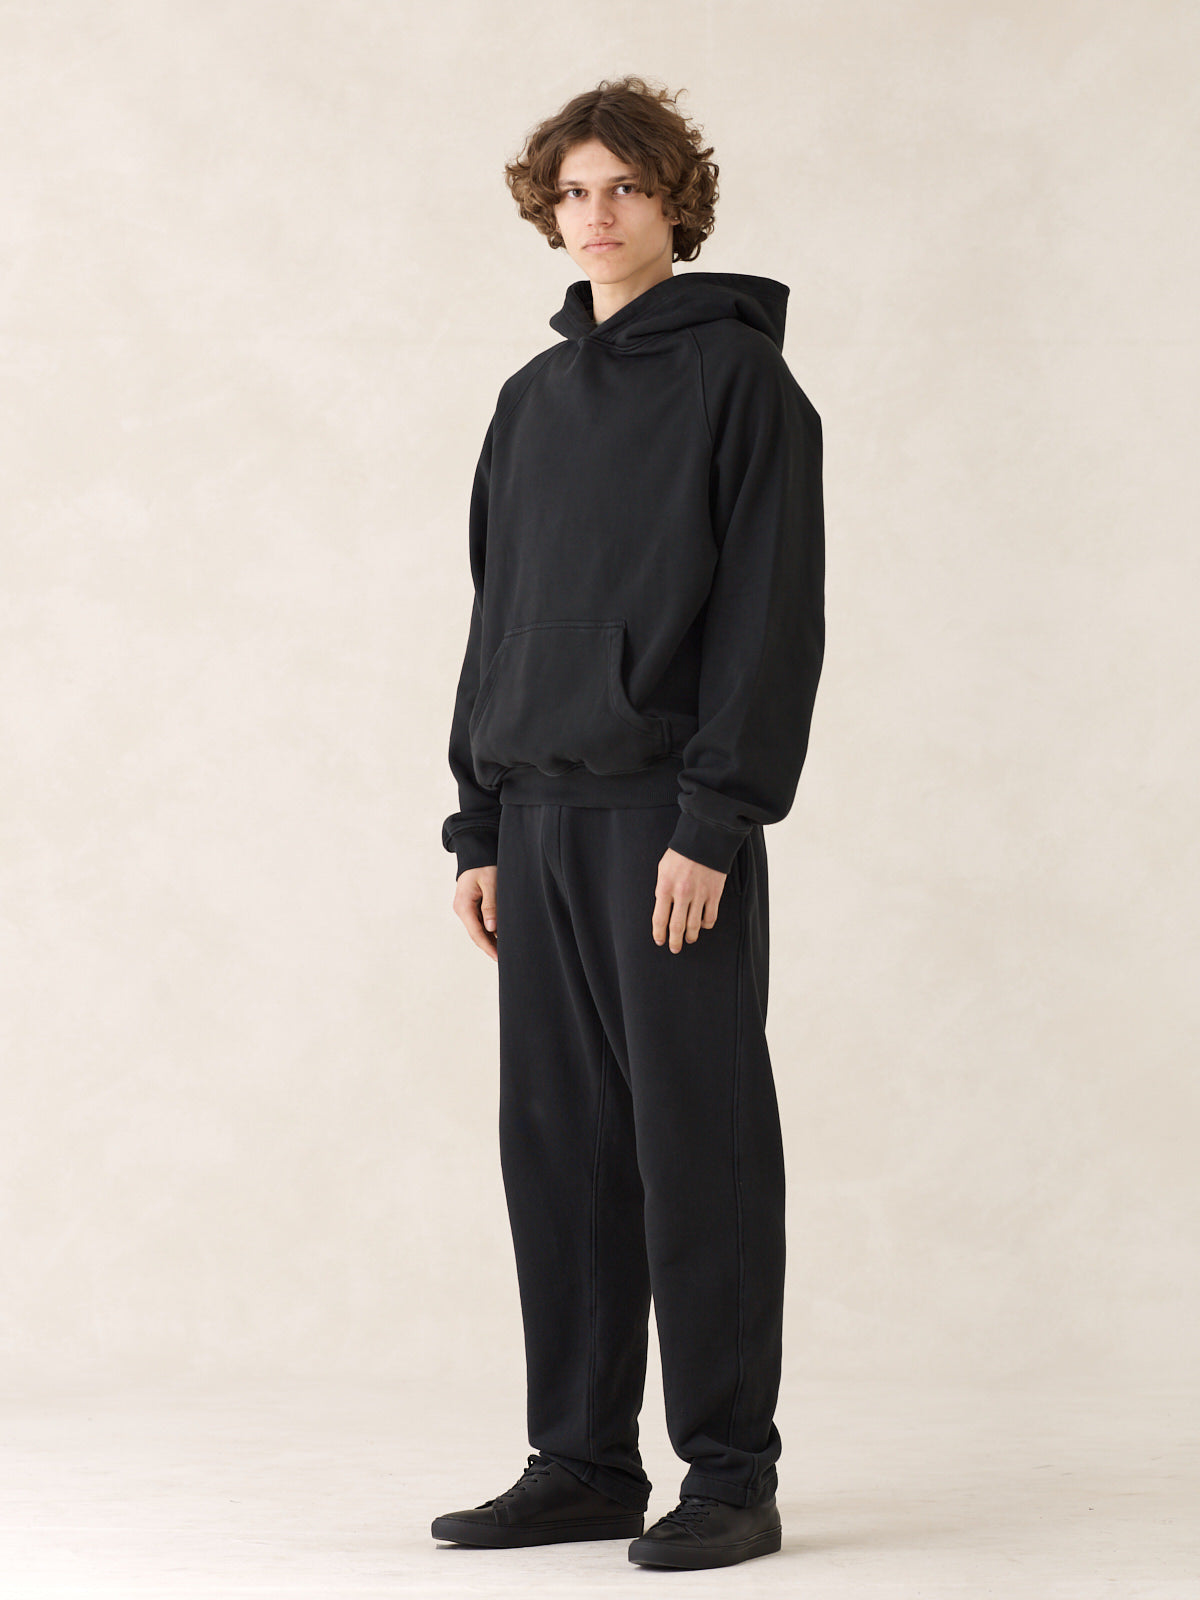 03 / Oftt Heavyweight Hooded Sweatshirt / Black